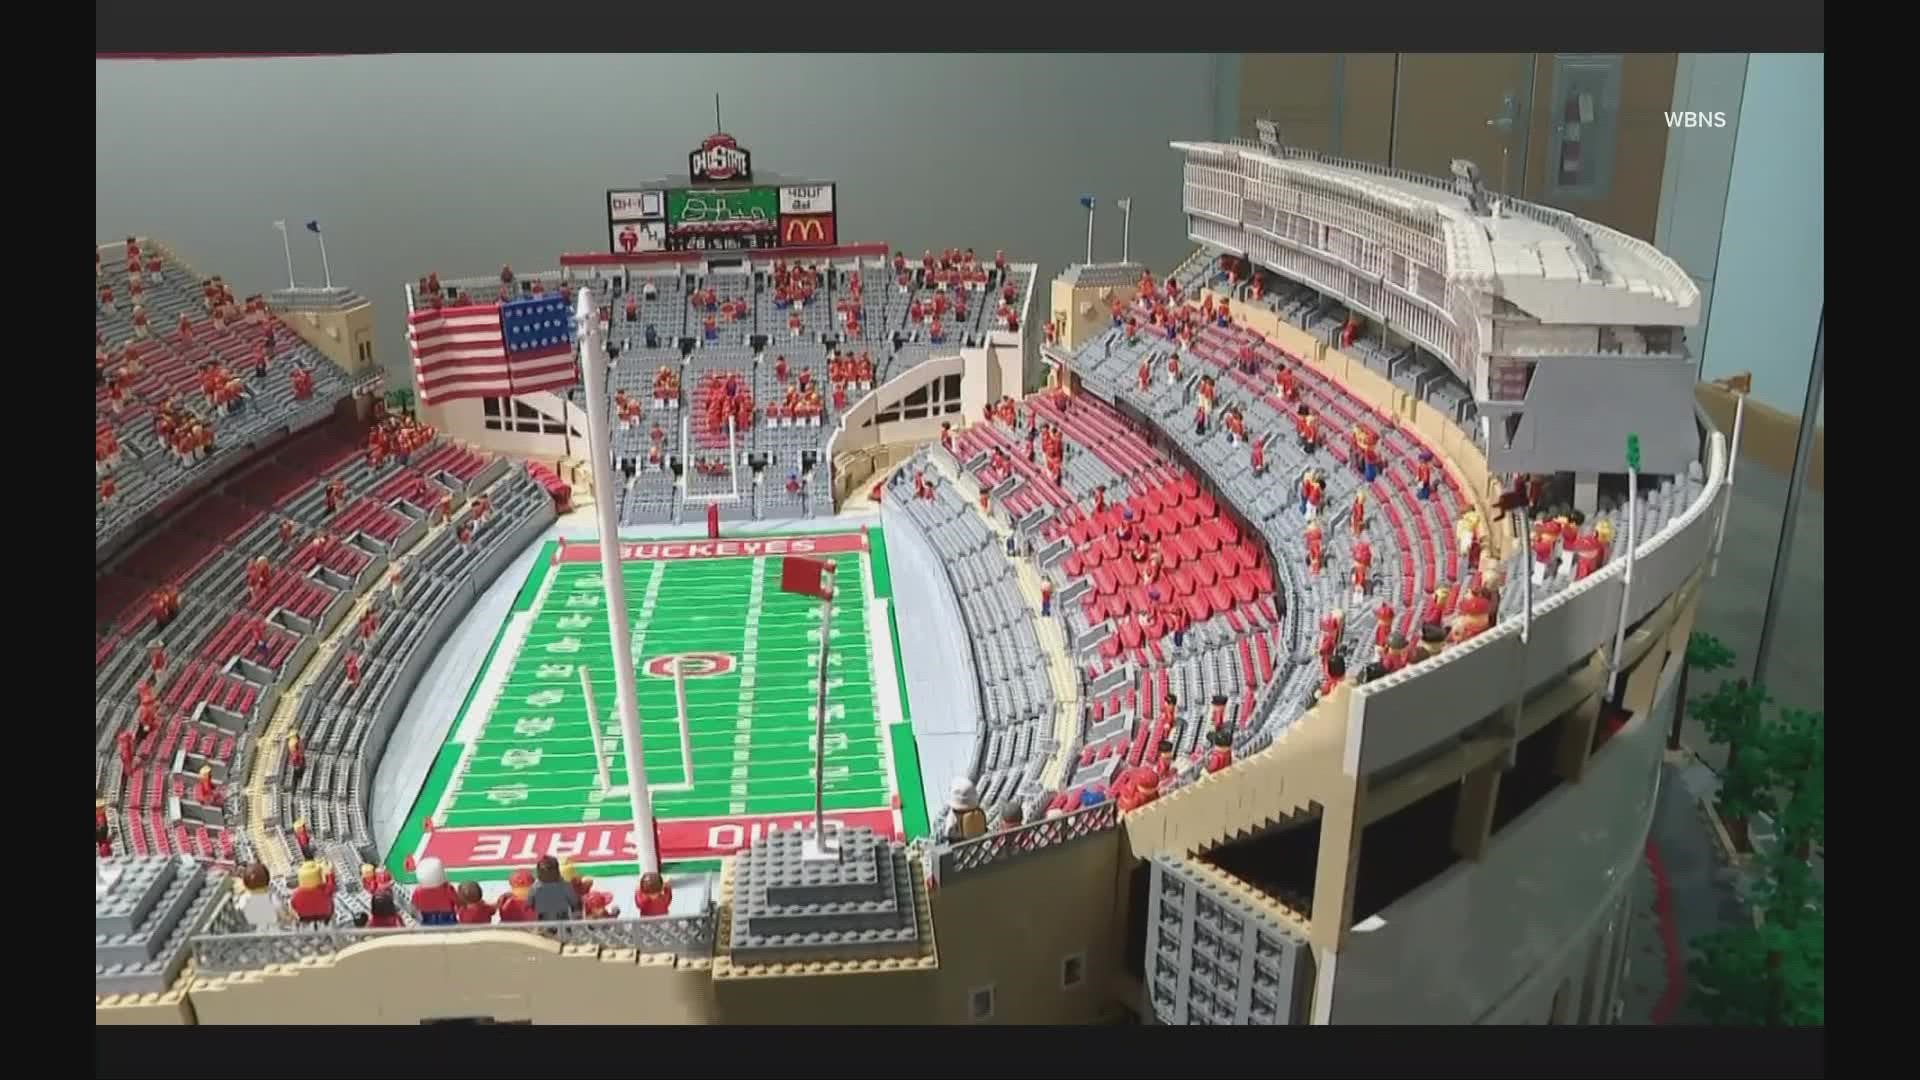 Professor builds Lego replica of Ohio Stadium to raise money for research |  